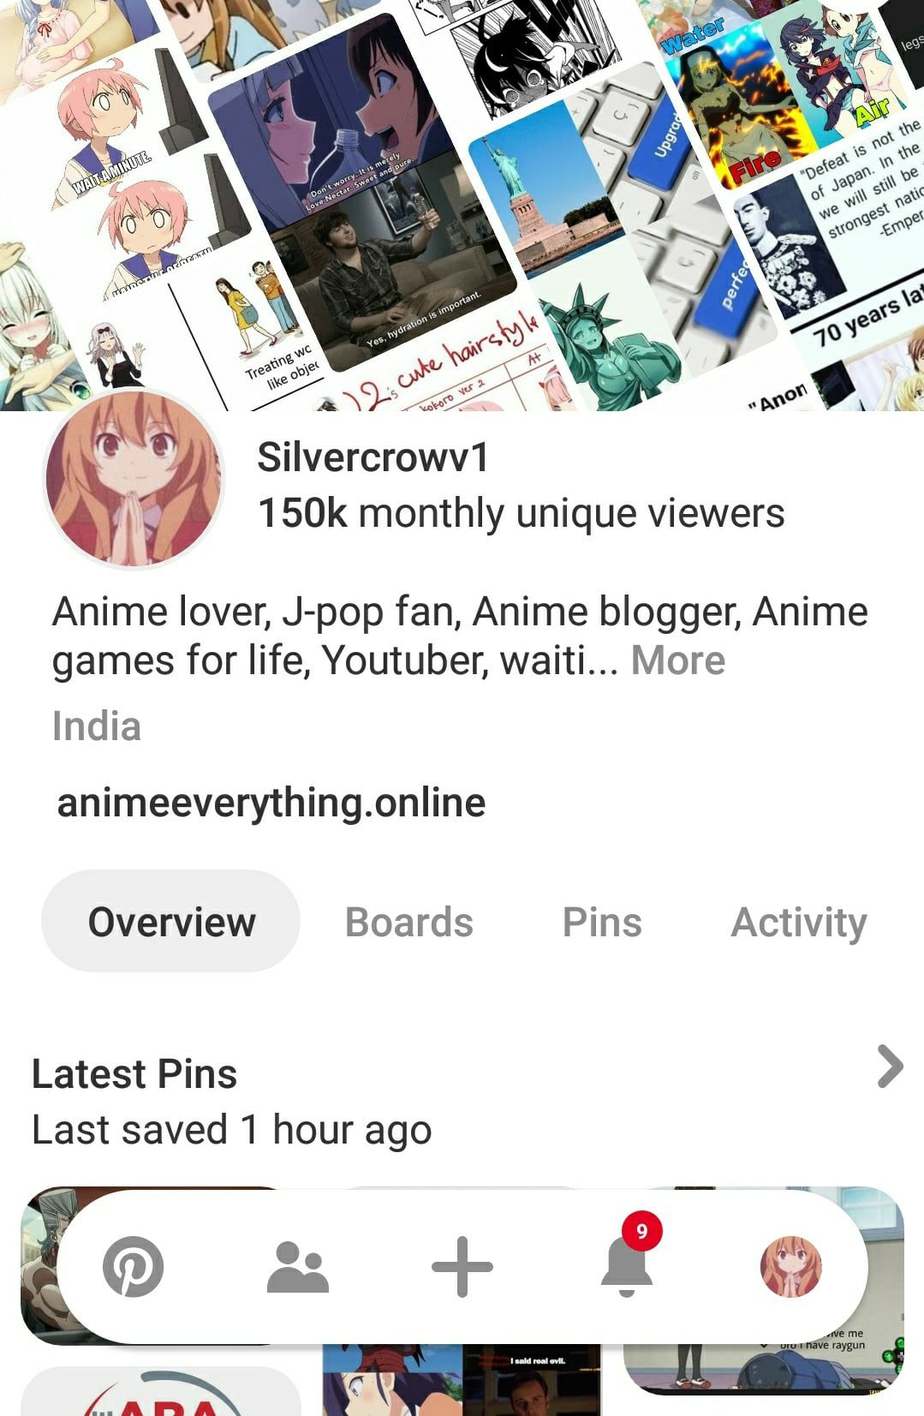 Promociona cosas de anime en pinterest